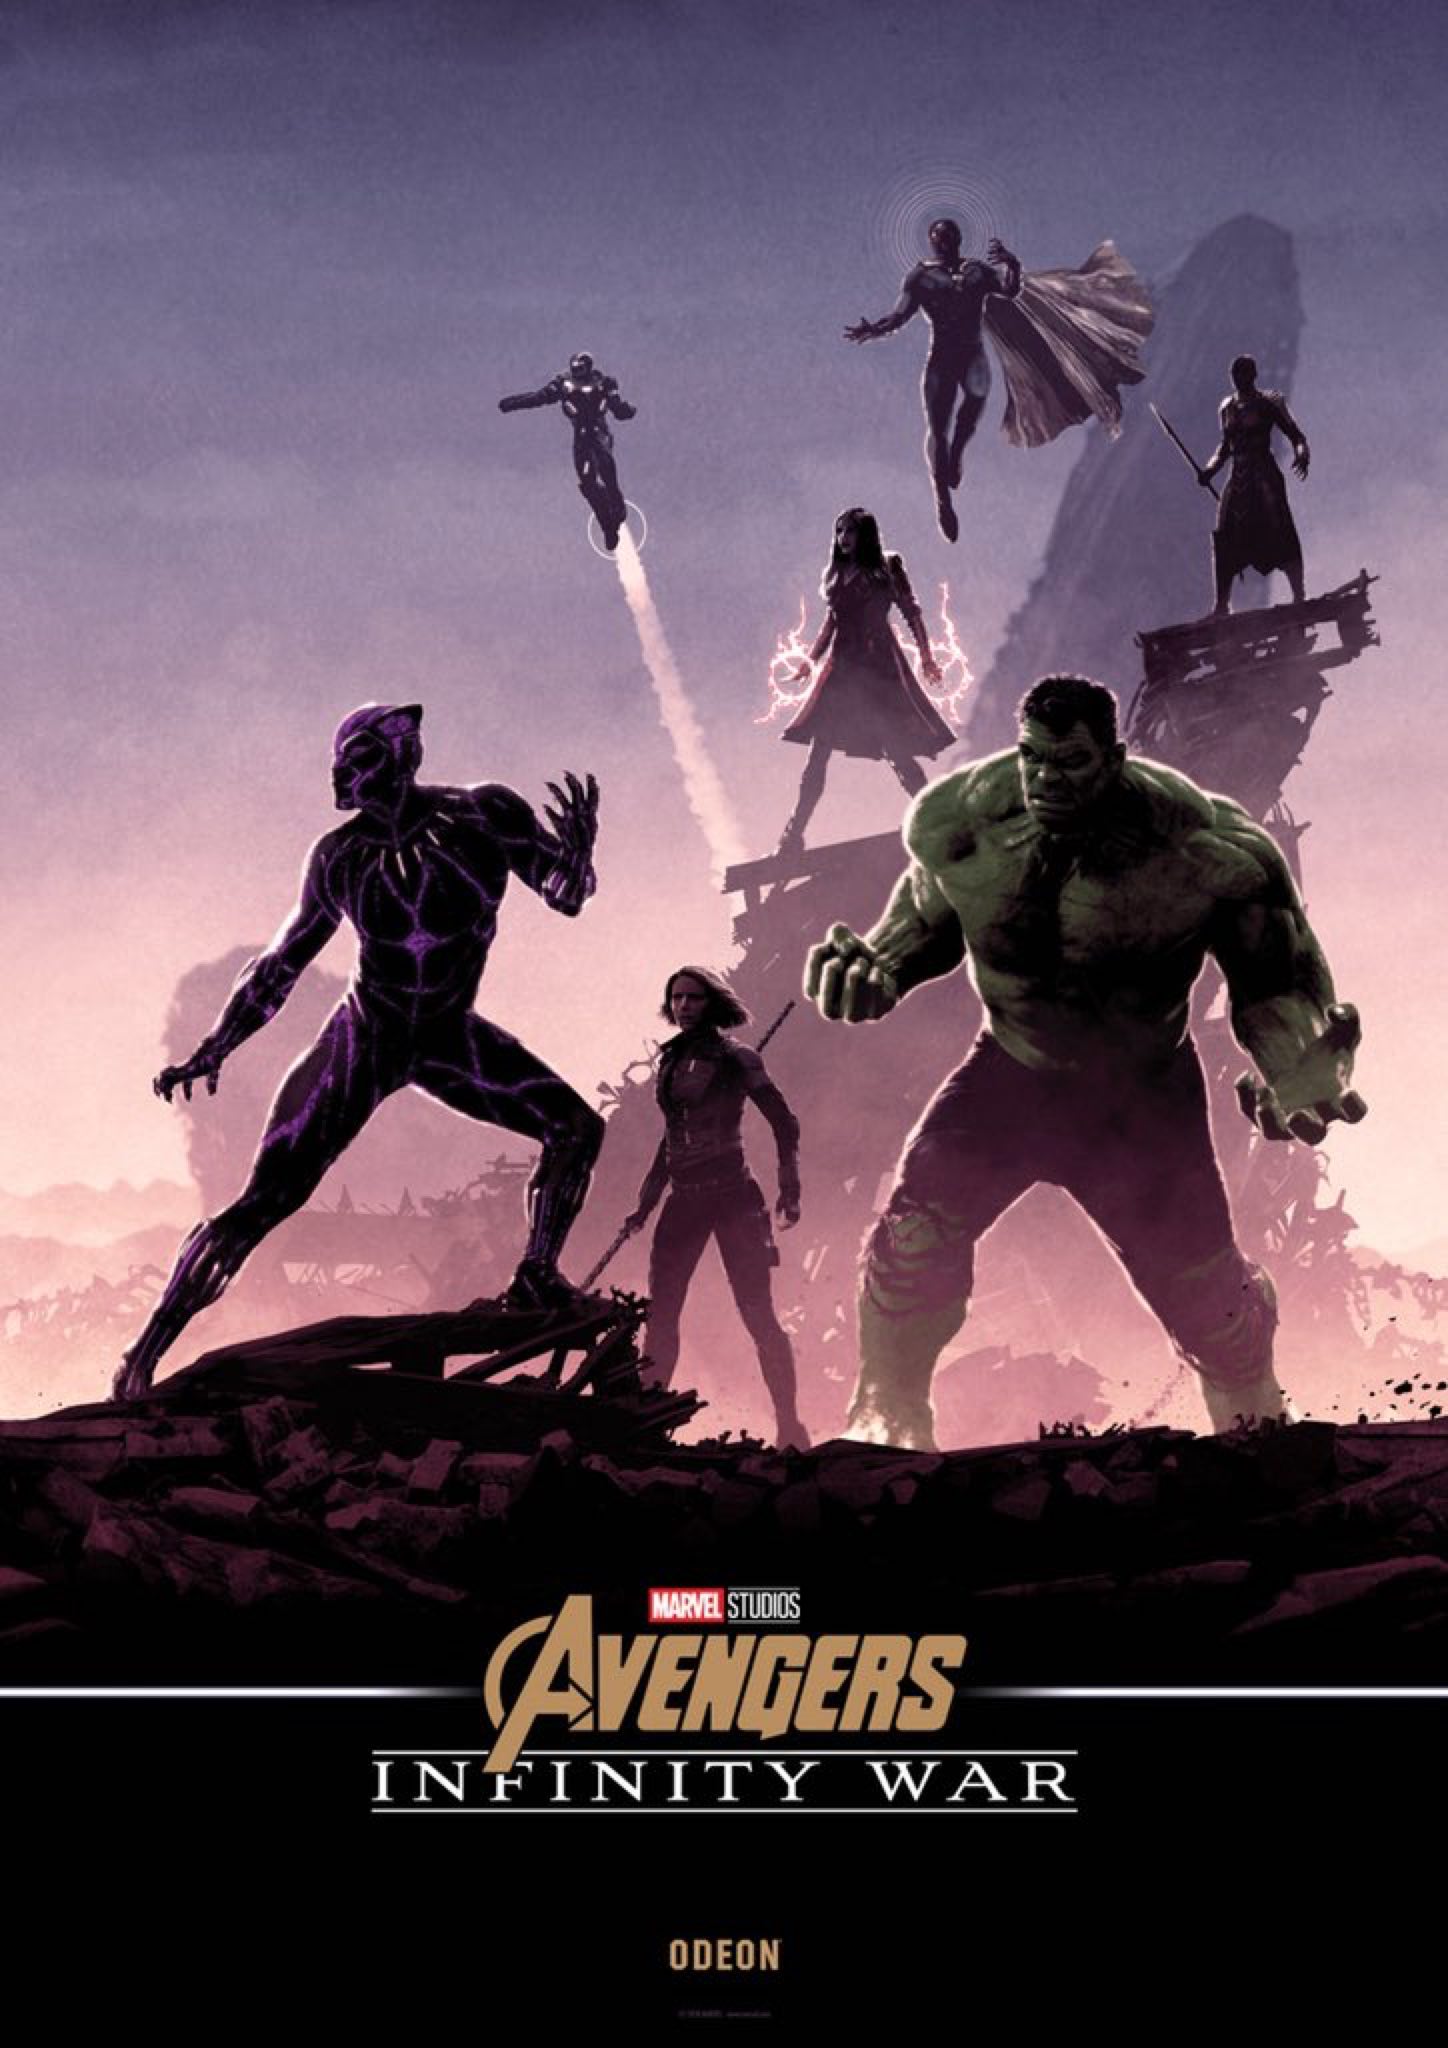 These Matt Ferguson Infinity War Posters Are Incredible